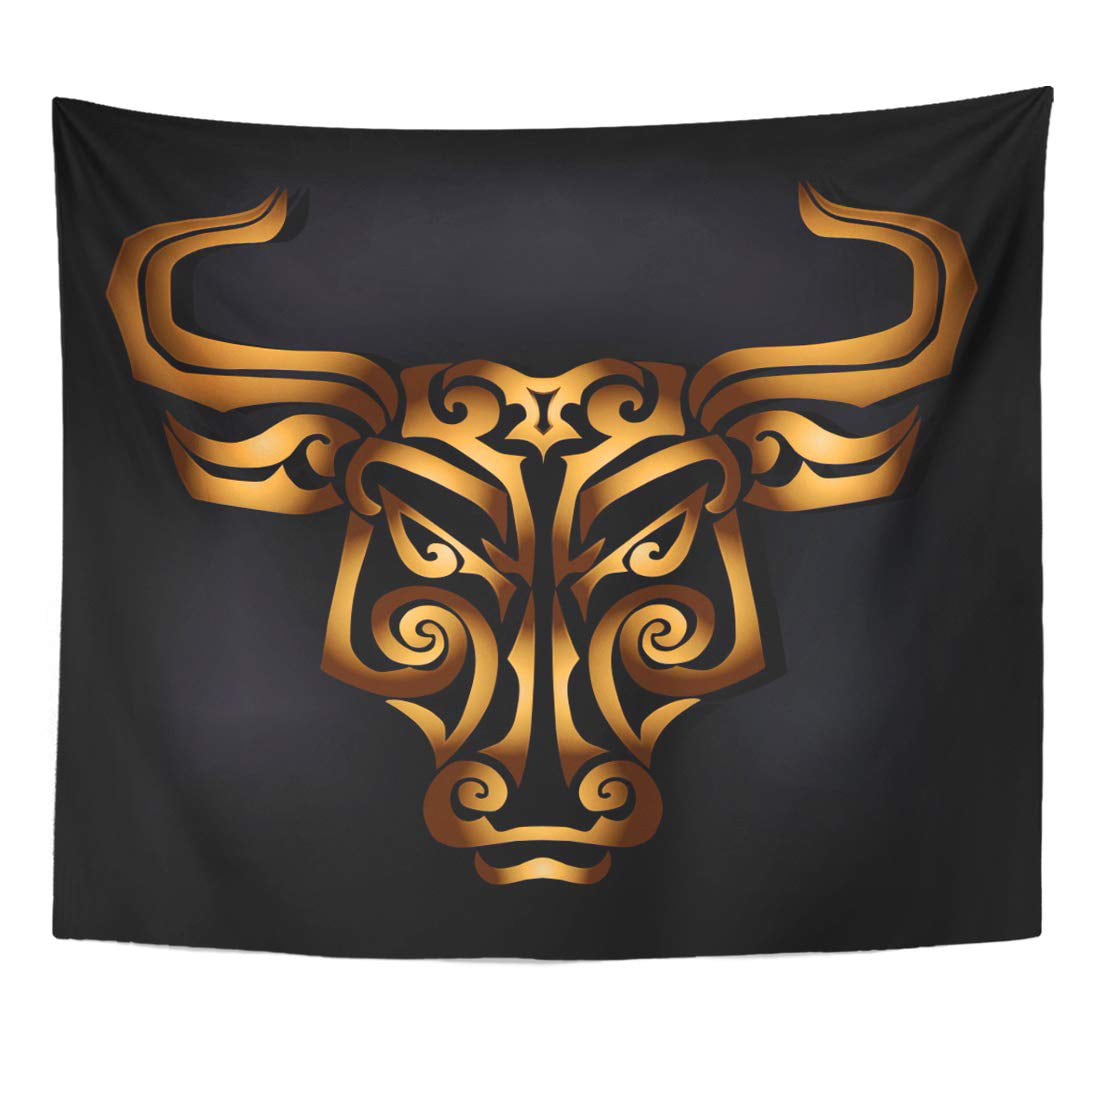 ZEALGNED Scythian Golden Bull Head Black Maori Face Tattoo Mask Taurus  American Astrology Wall Art Hanging Tapestry Home Decor for Living Room  Bedroom Dorm 60x80 inch 